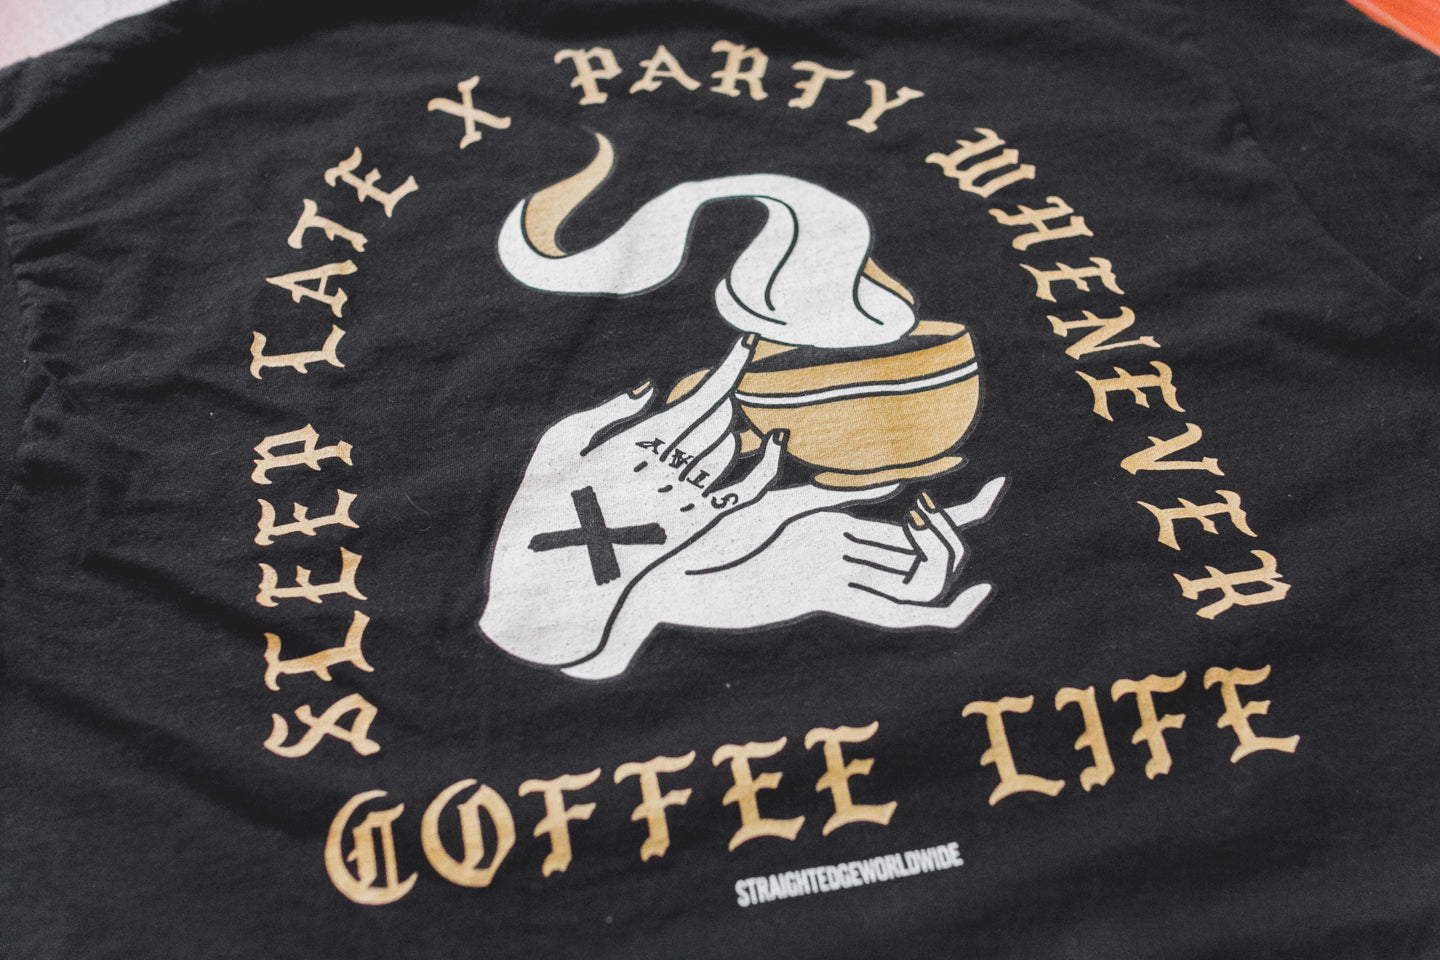 Mugs Not Drugs Coffee x Life black Straight Edge Drug Free T-shirt by STRAIGHTEDGEWORLDWIDE